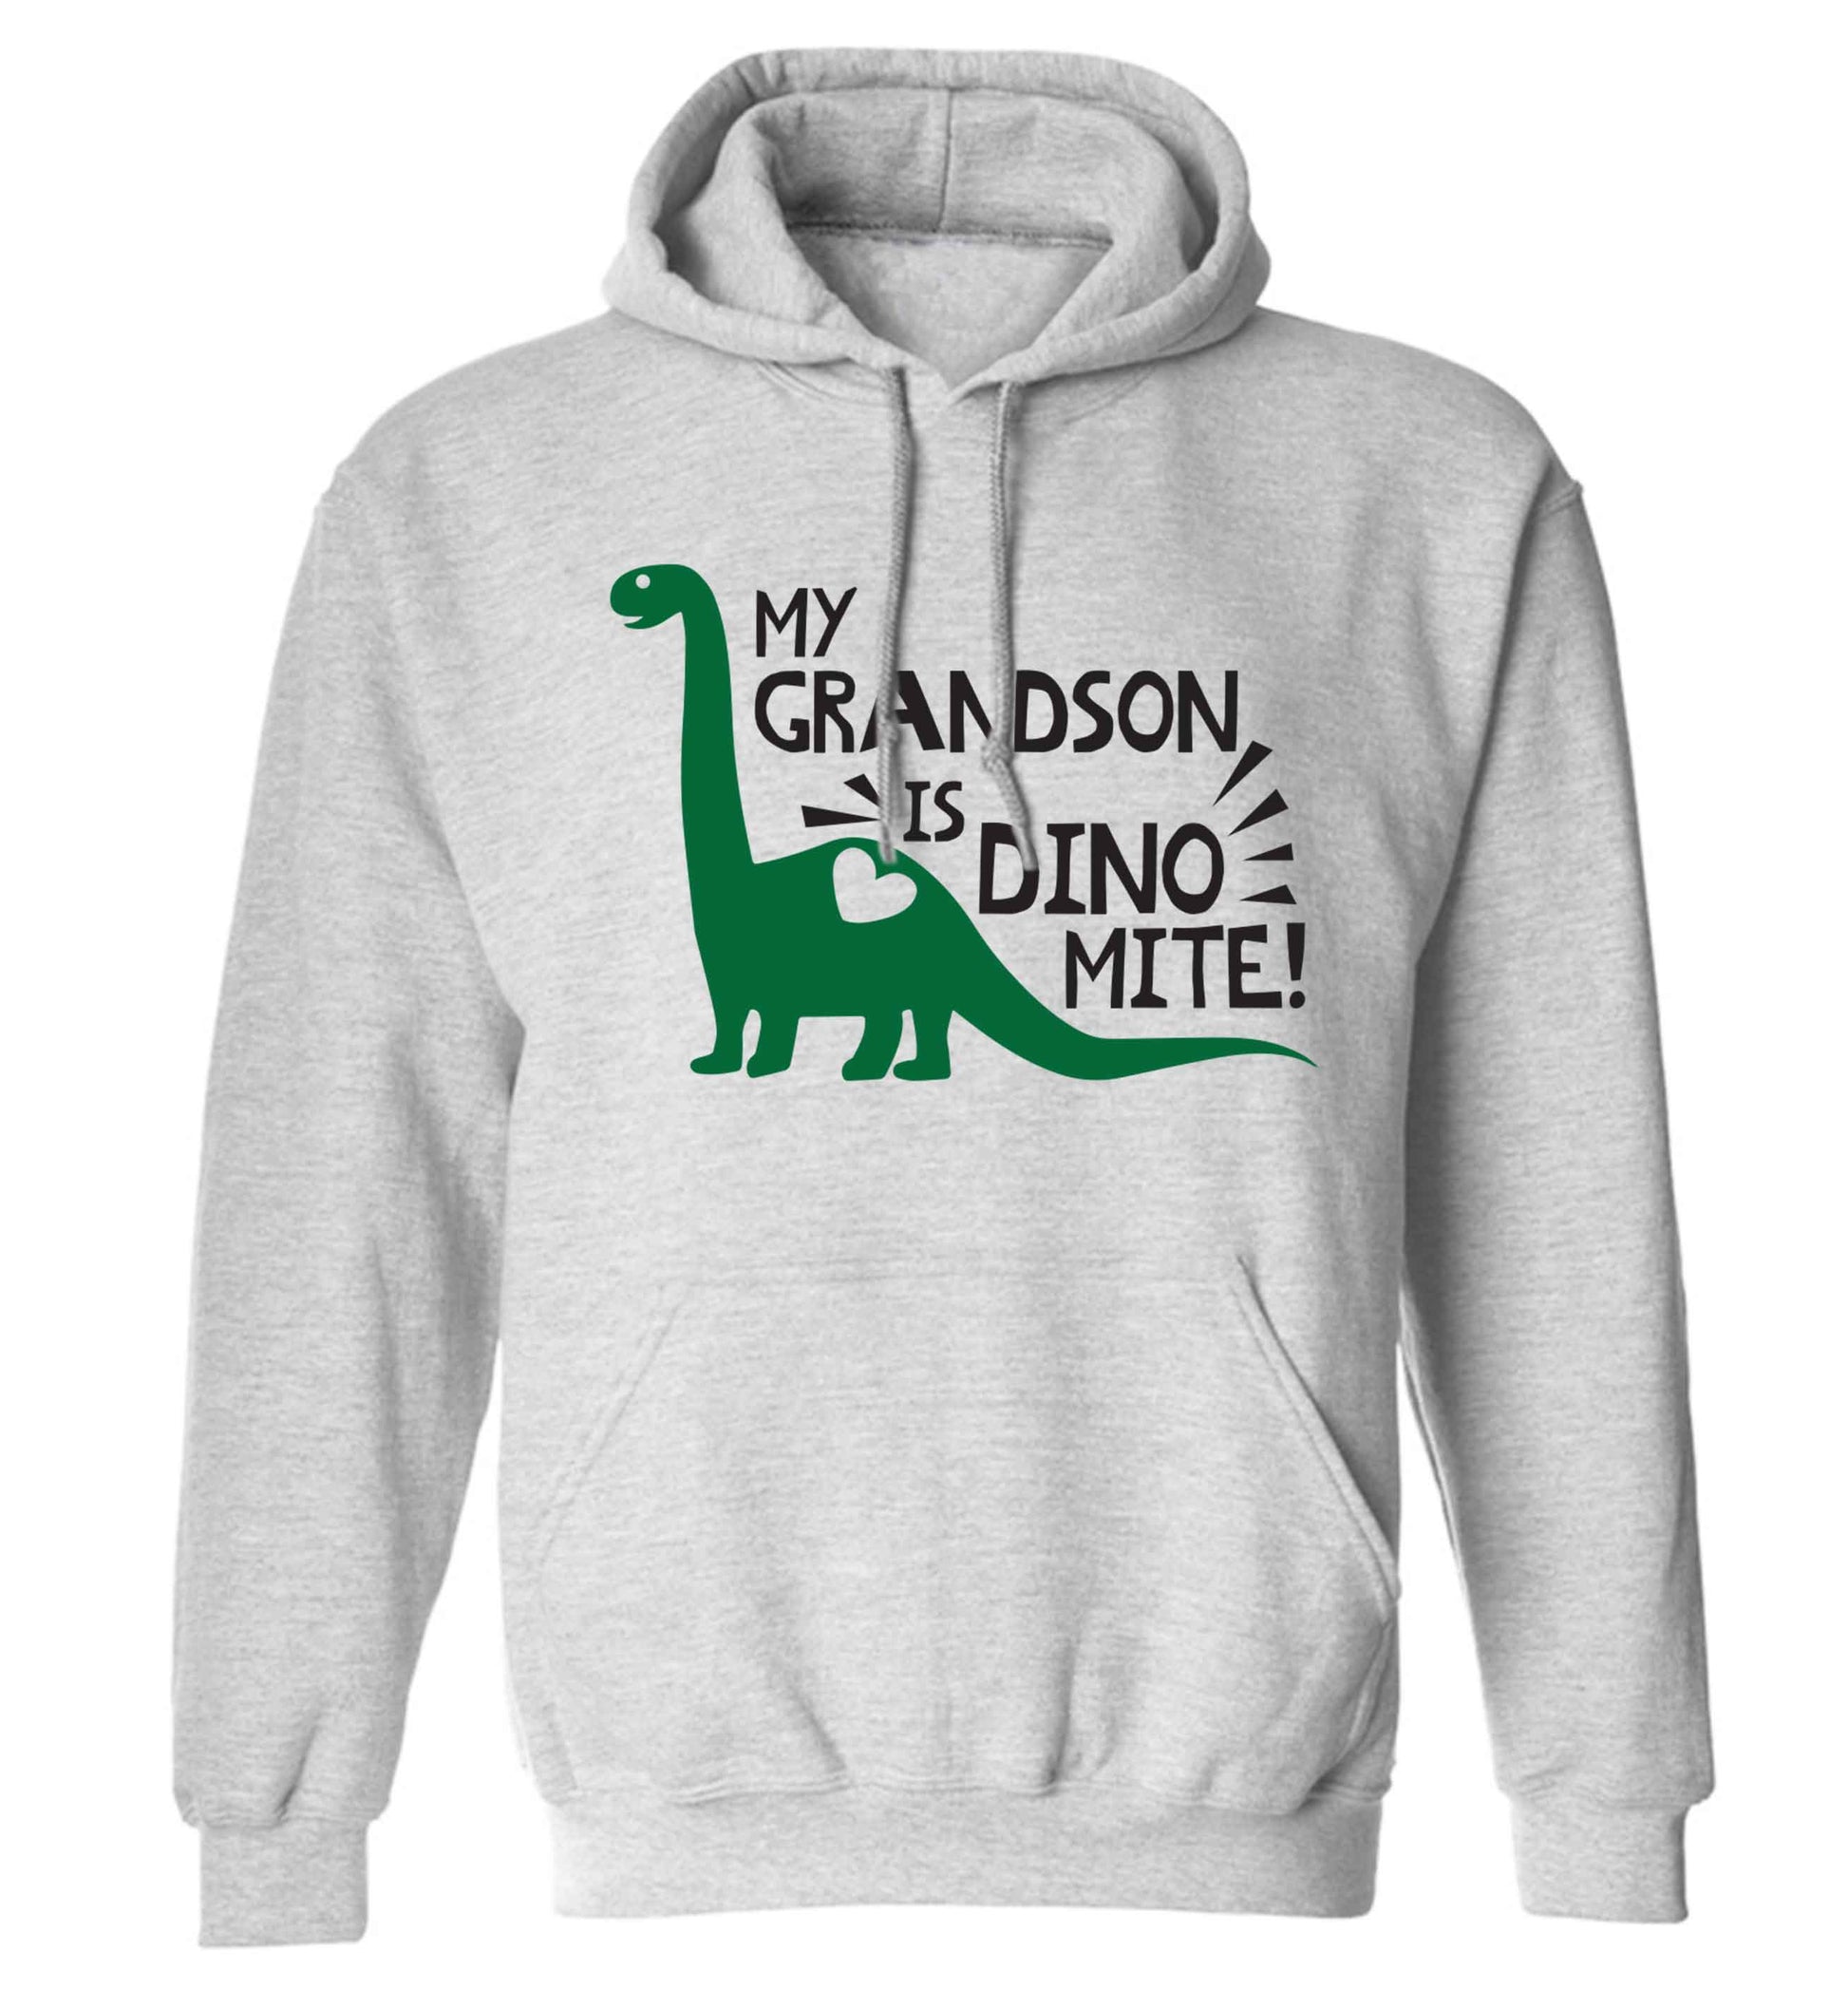 My grandson is dinomite! adults unisex grey hoodie 2XL